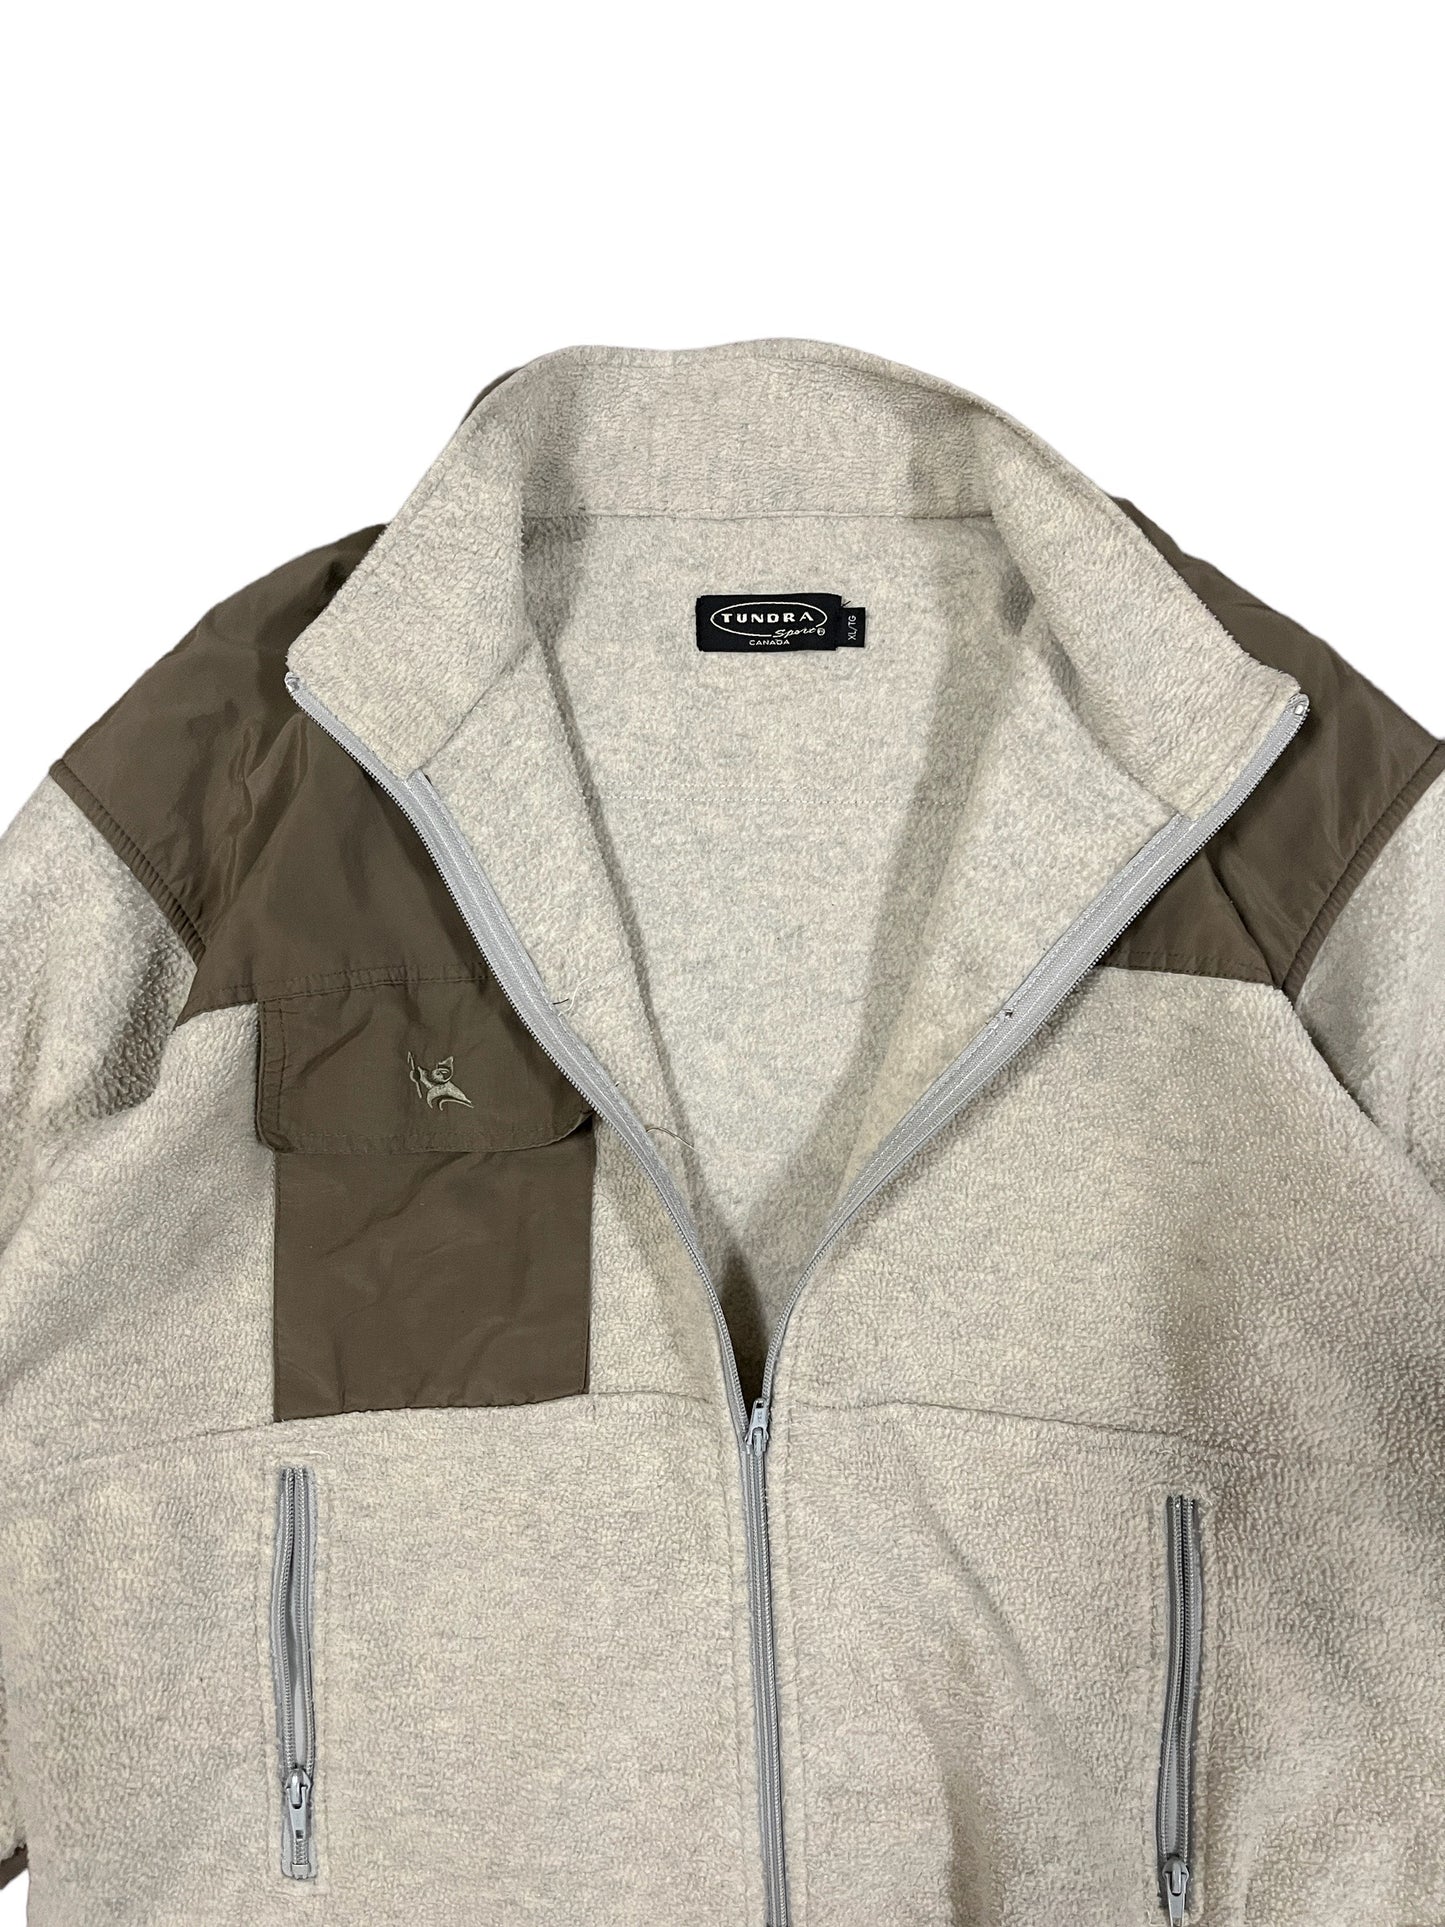 Vintage Tundra Teddy Fleece Full Zip-up Jacket